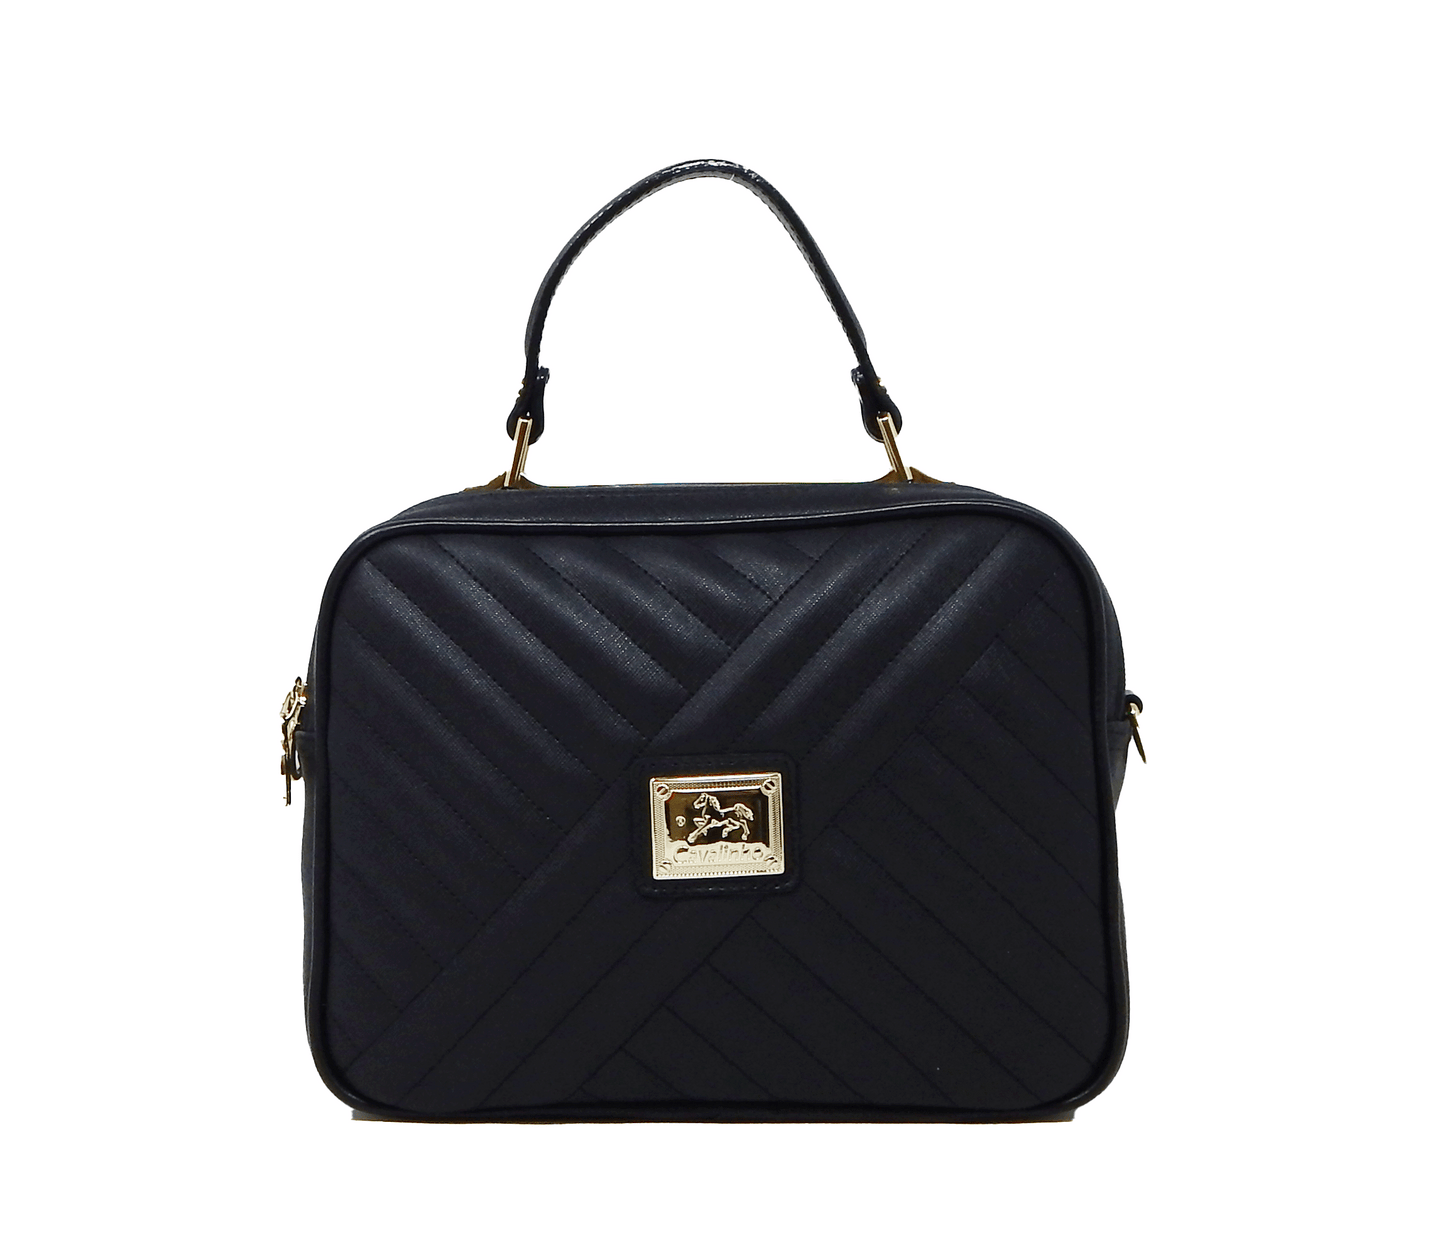 Cavalinho Charming Handbag - Black - 18470186.01_1